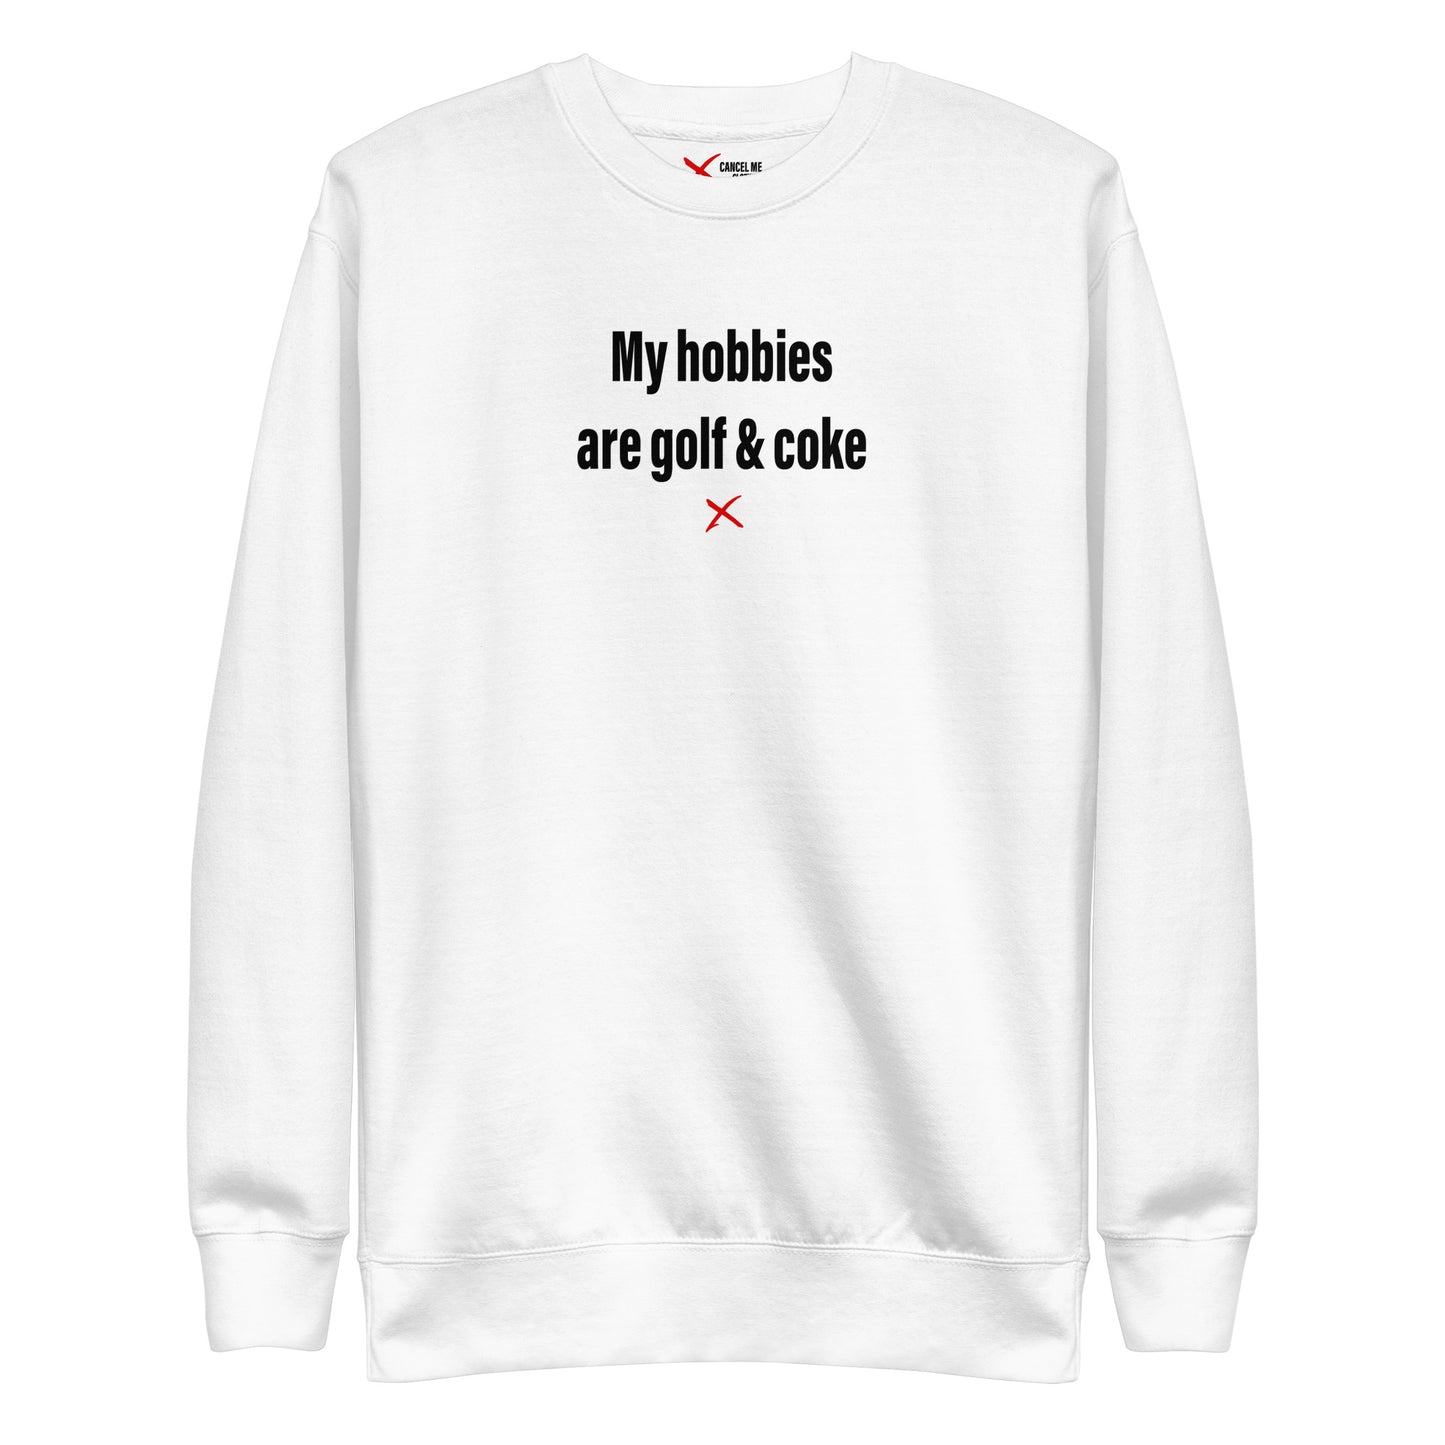 My hobbies are golf & coke - Sweatshirt